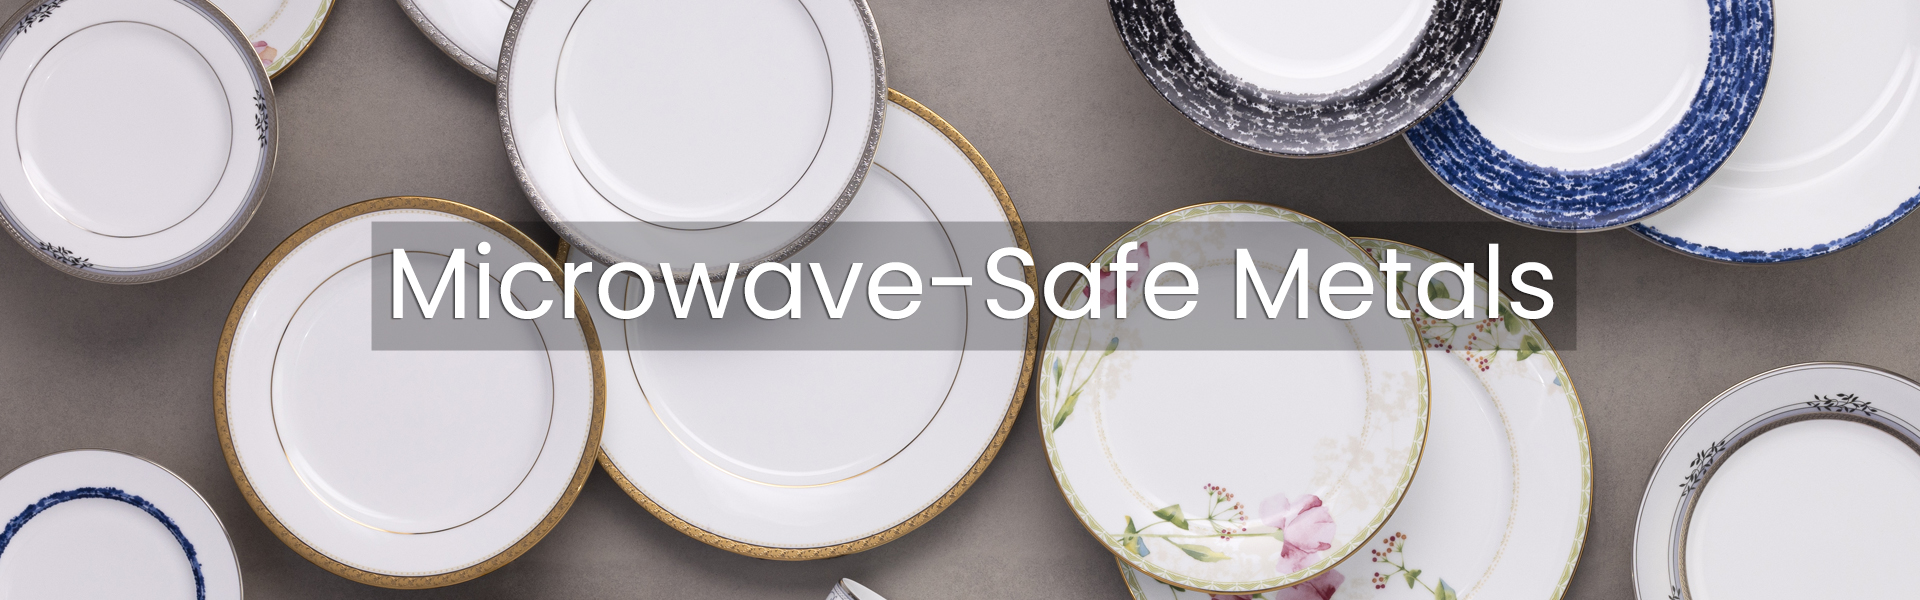 Microwave-Safe Metals